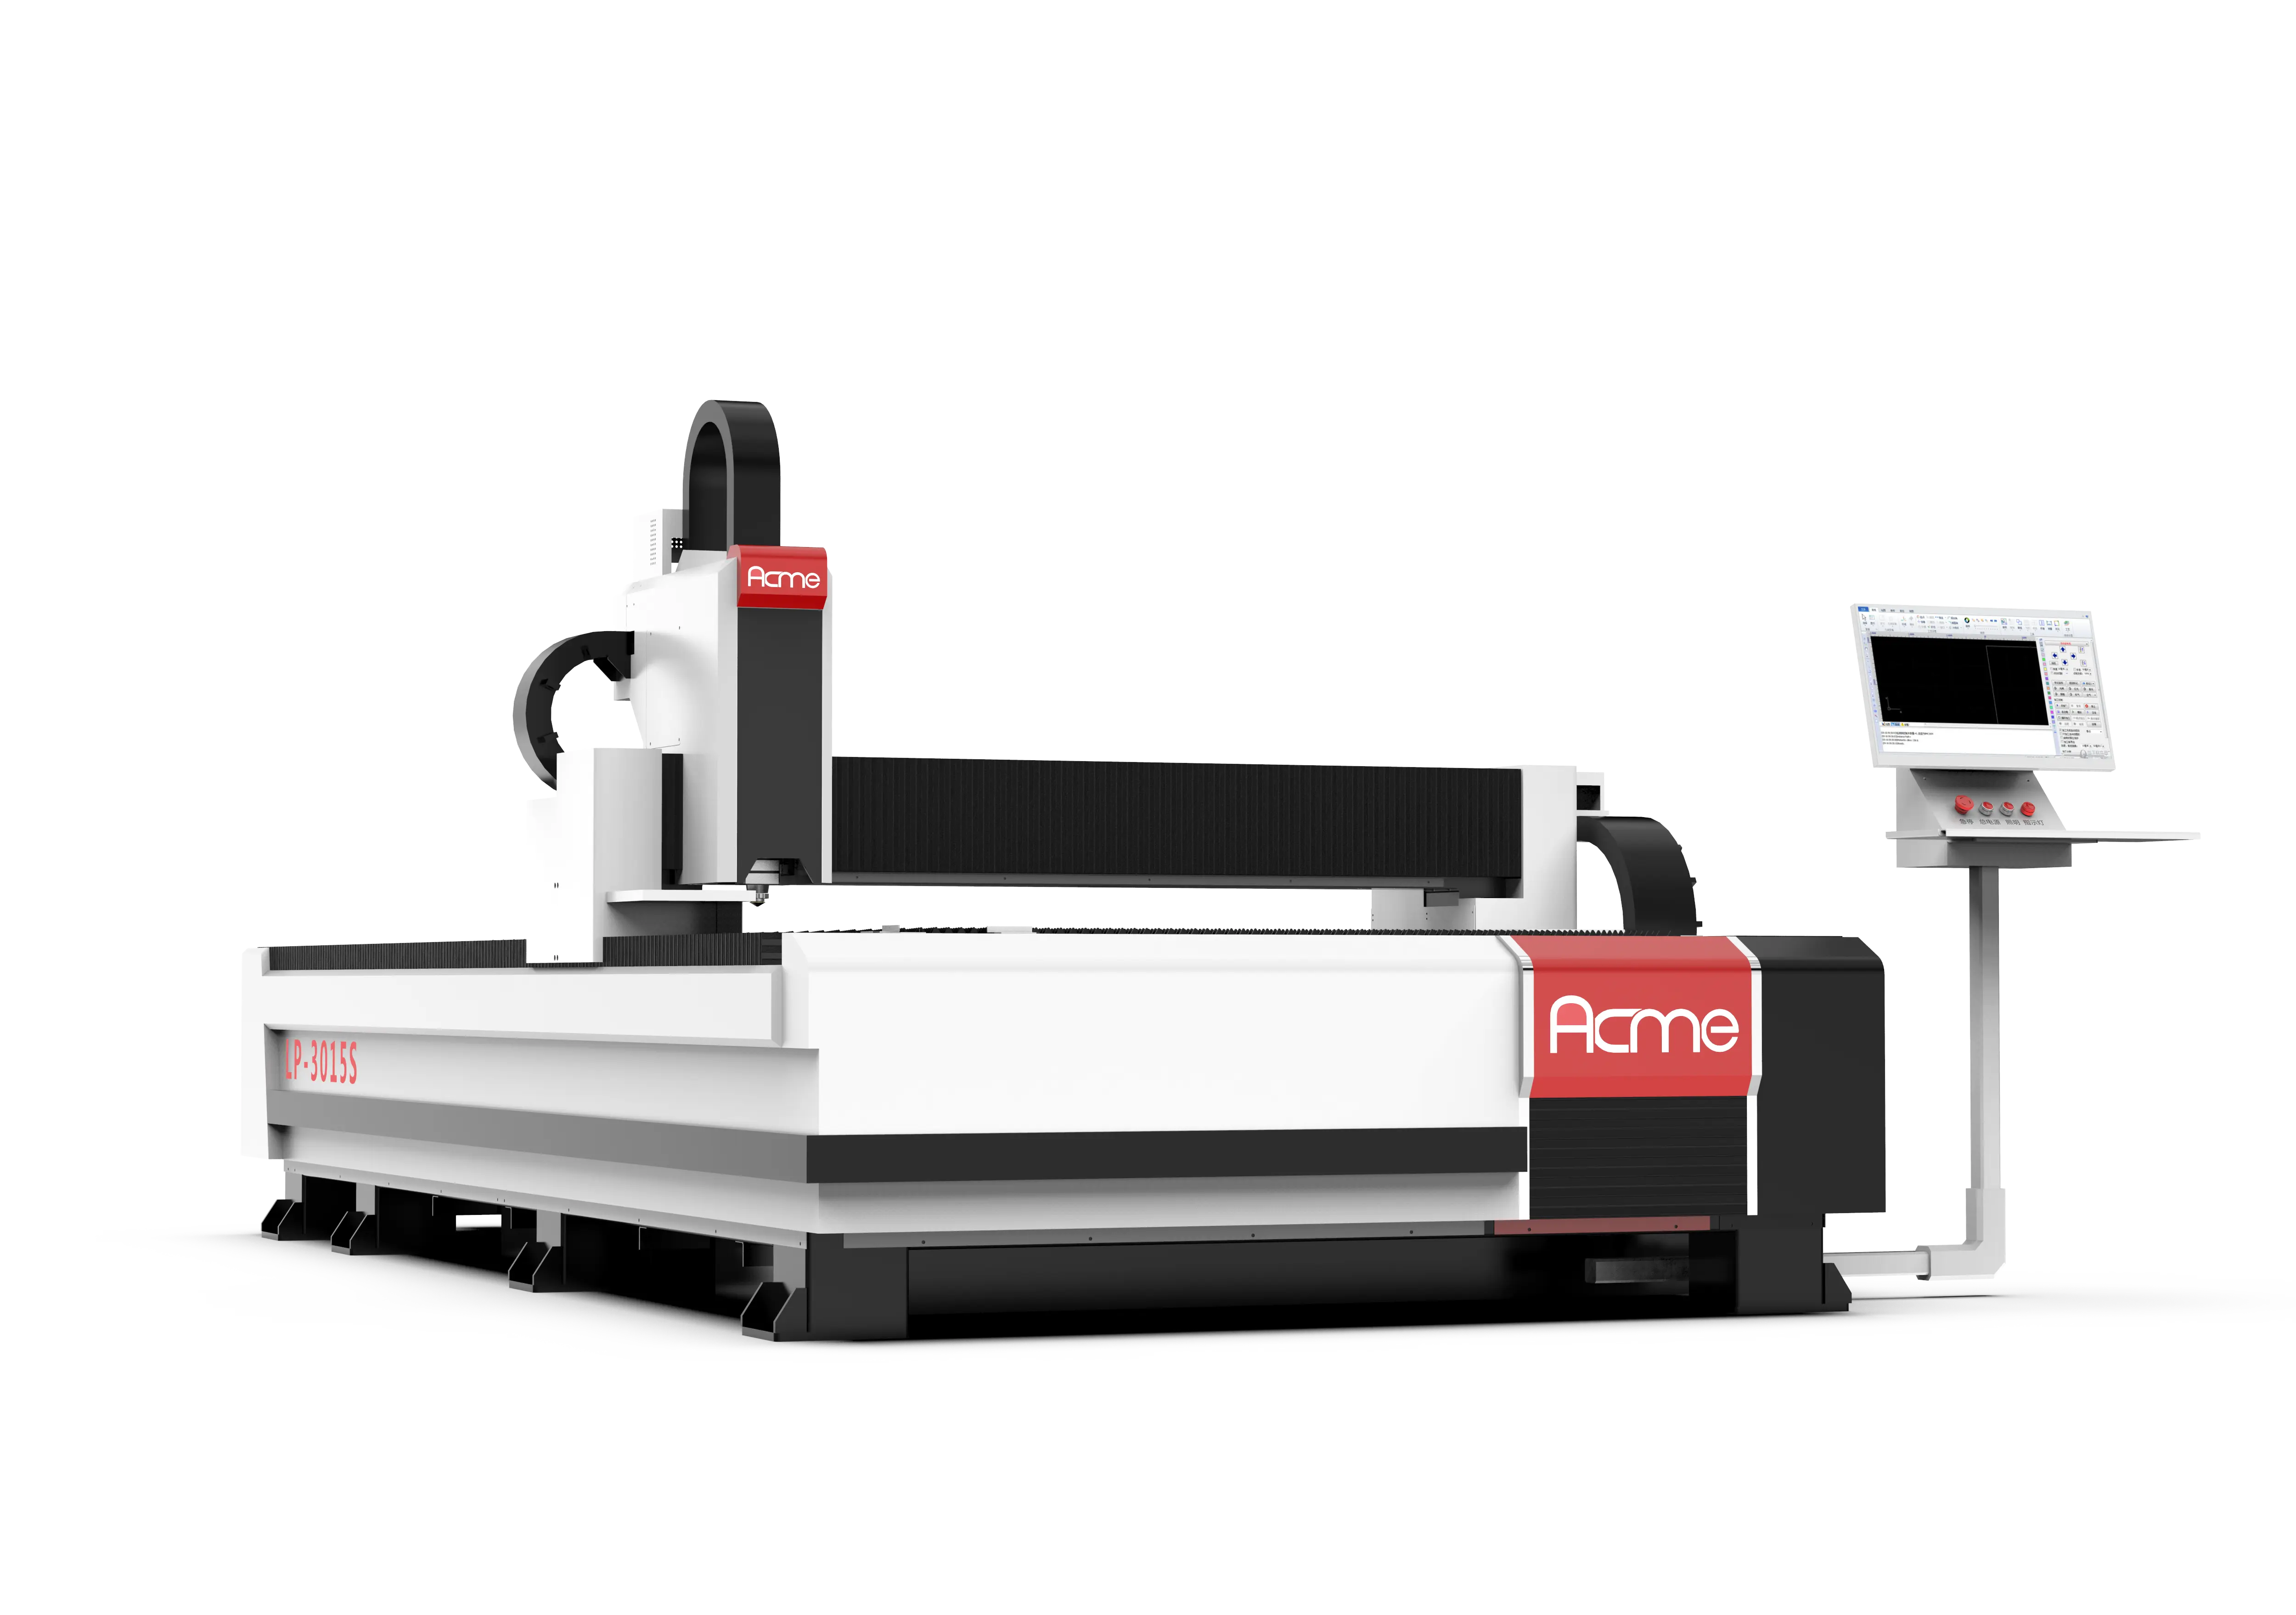 Acme laser cutter LP - 3015s / / plate cutter / / Factory direct Supply